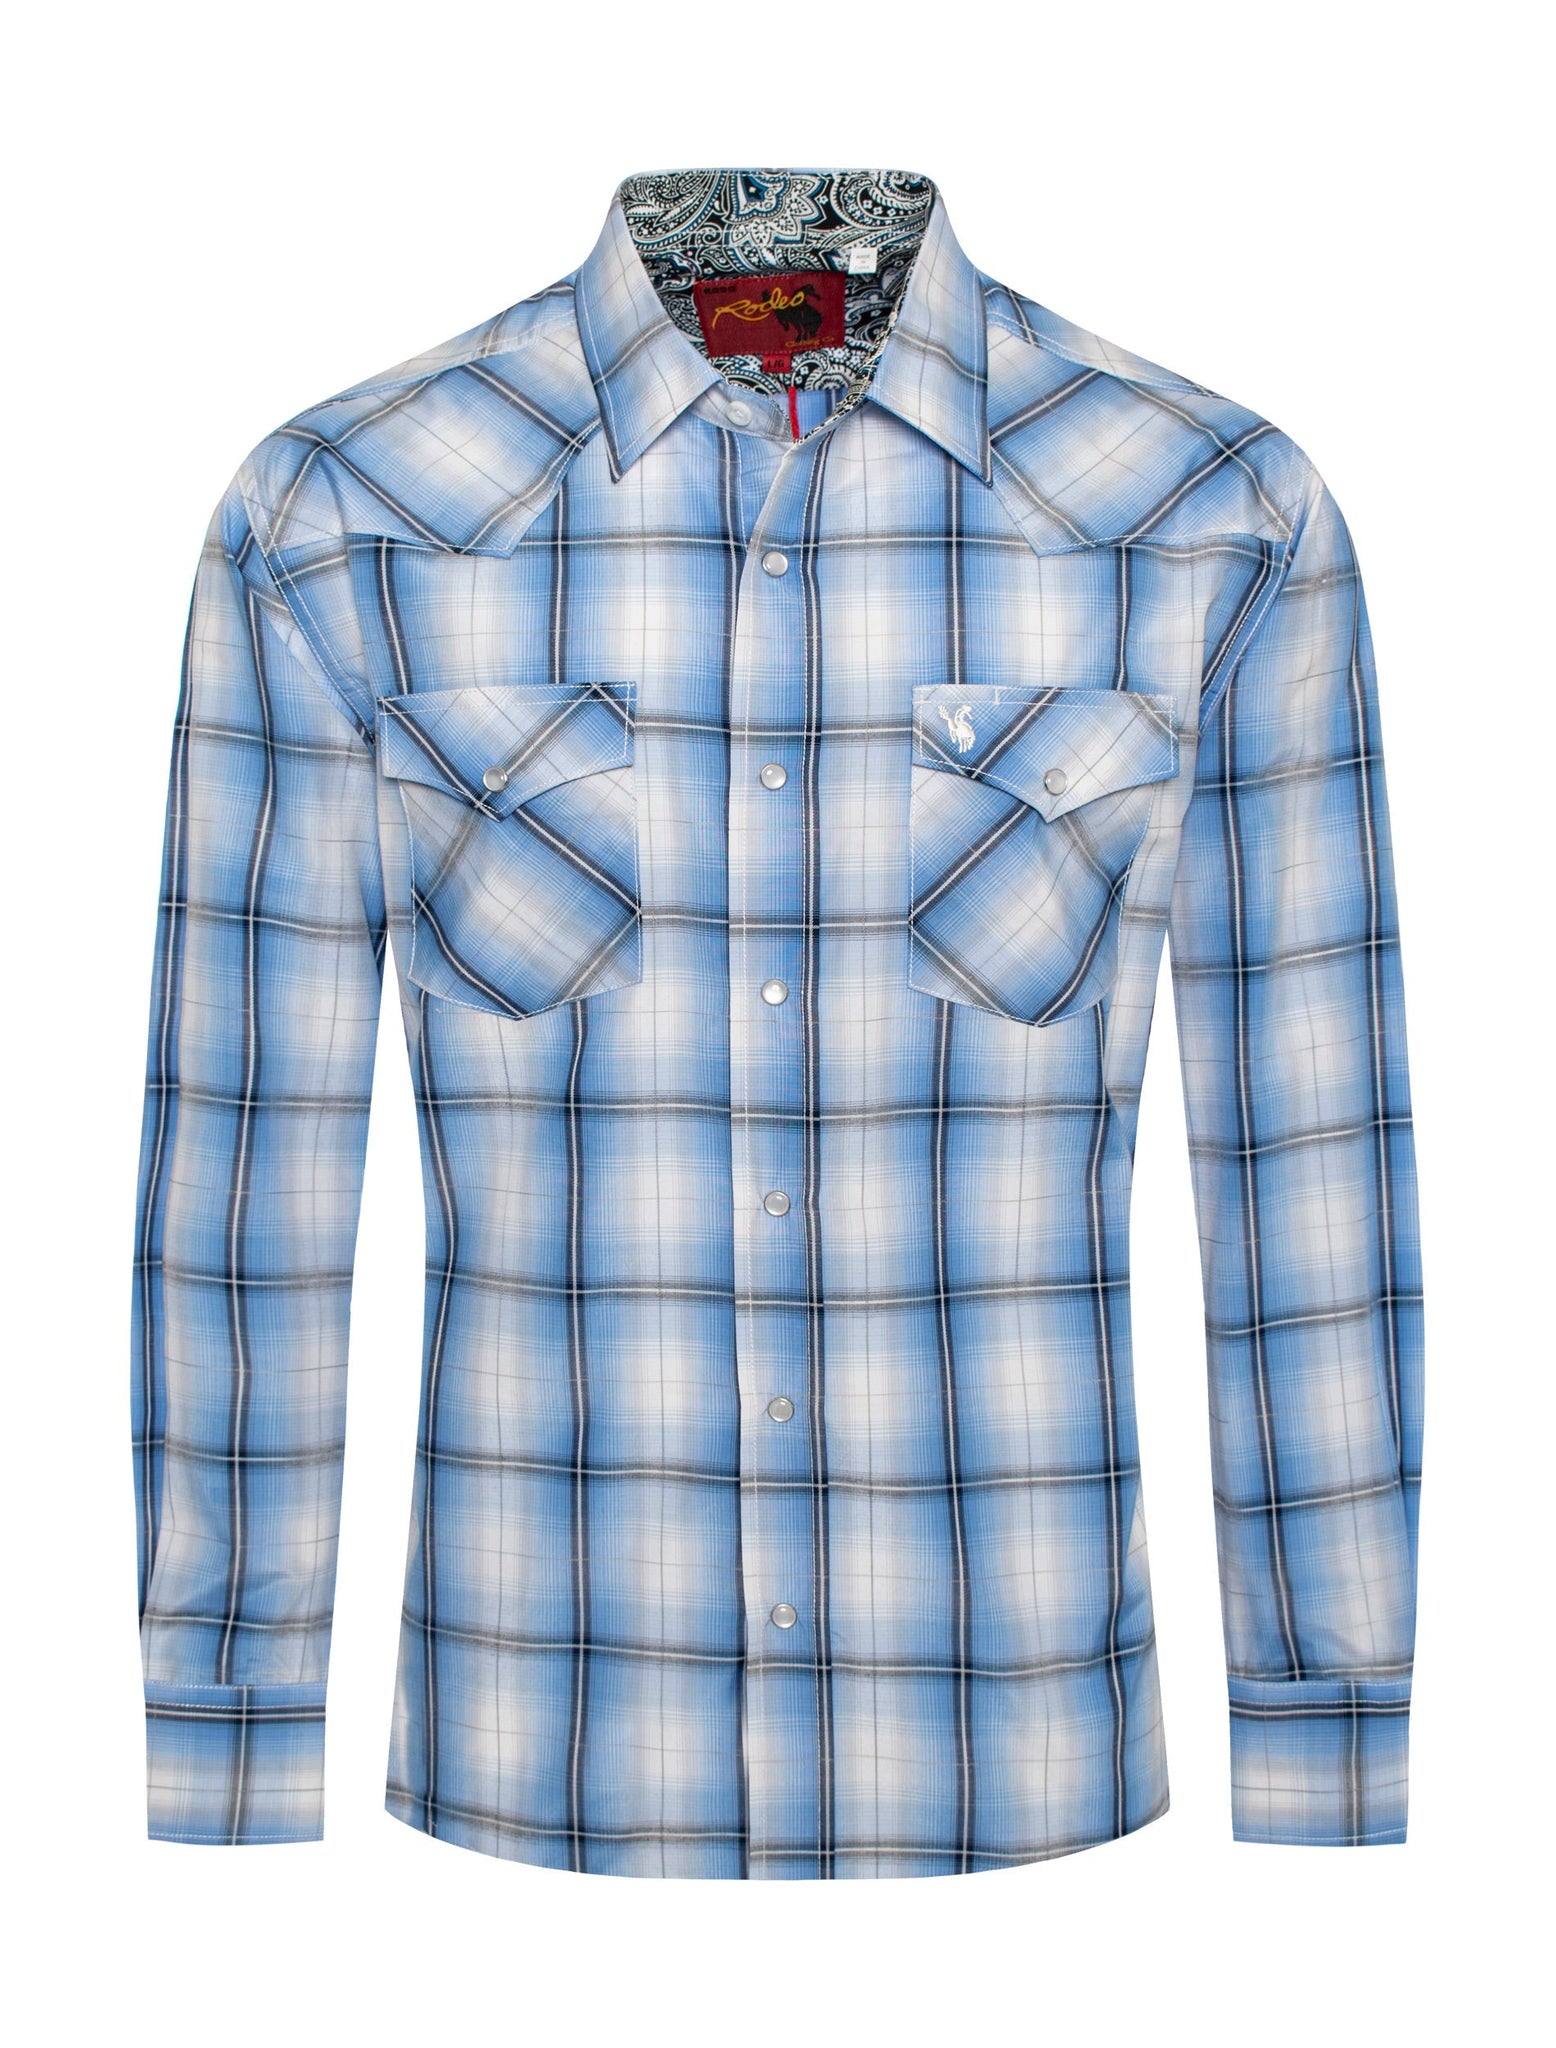 Men's Western Long Sleeve Pearl Snap Plaid Shirt -PS400-417